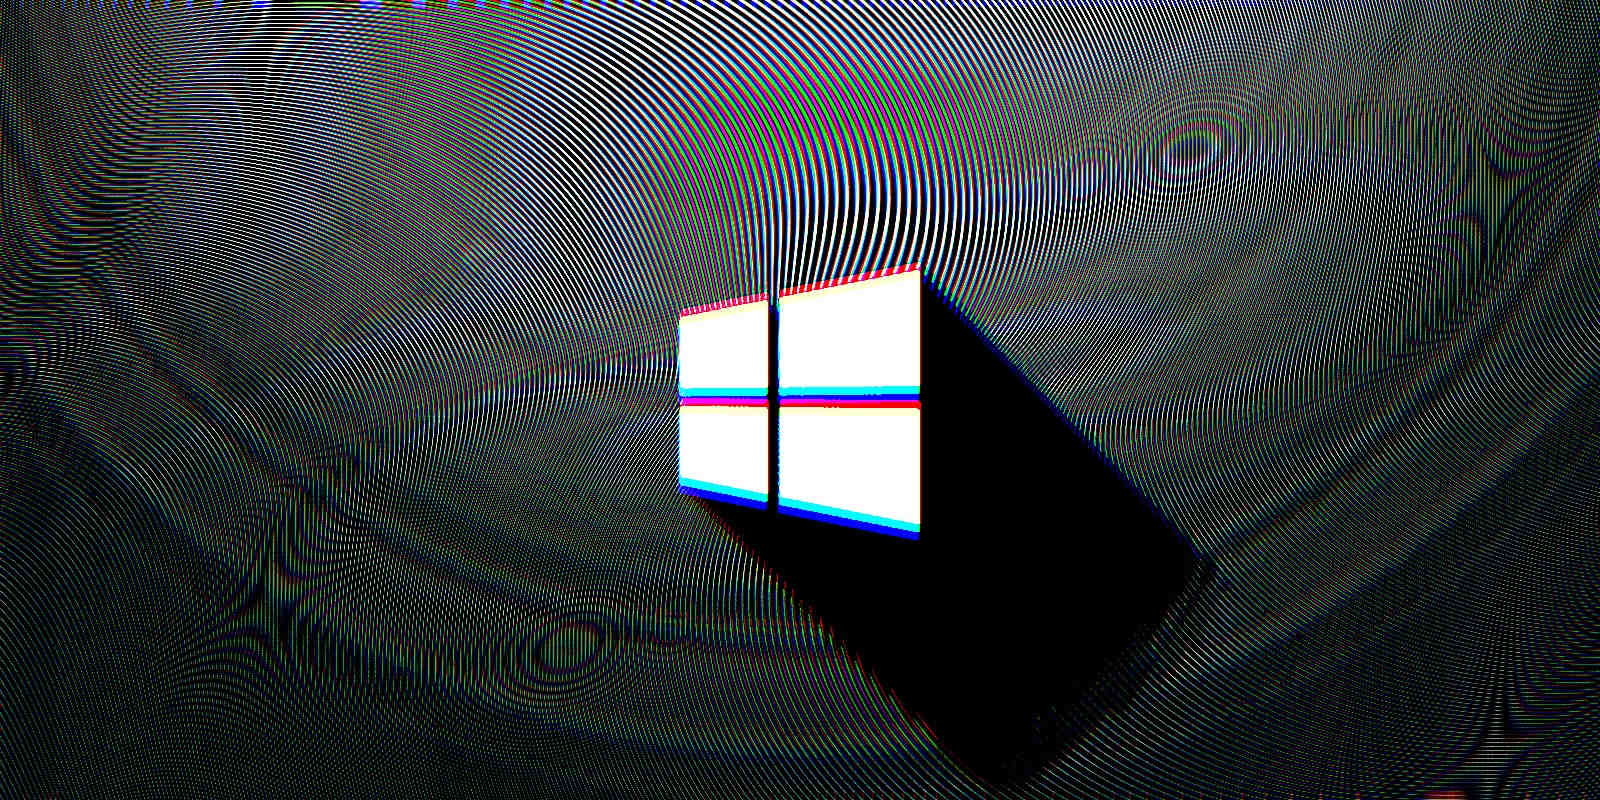 Microsoft pulls a second Windows SSU for blocking security updates